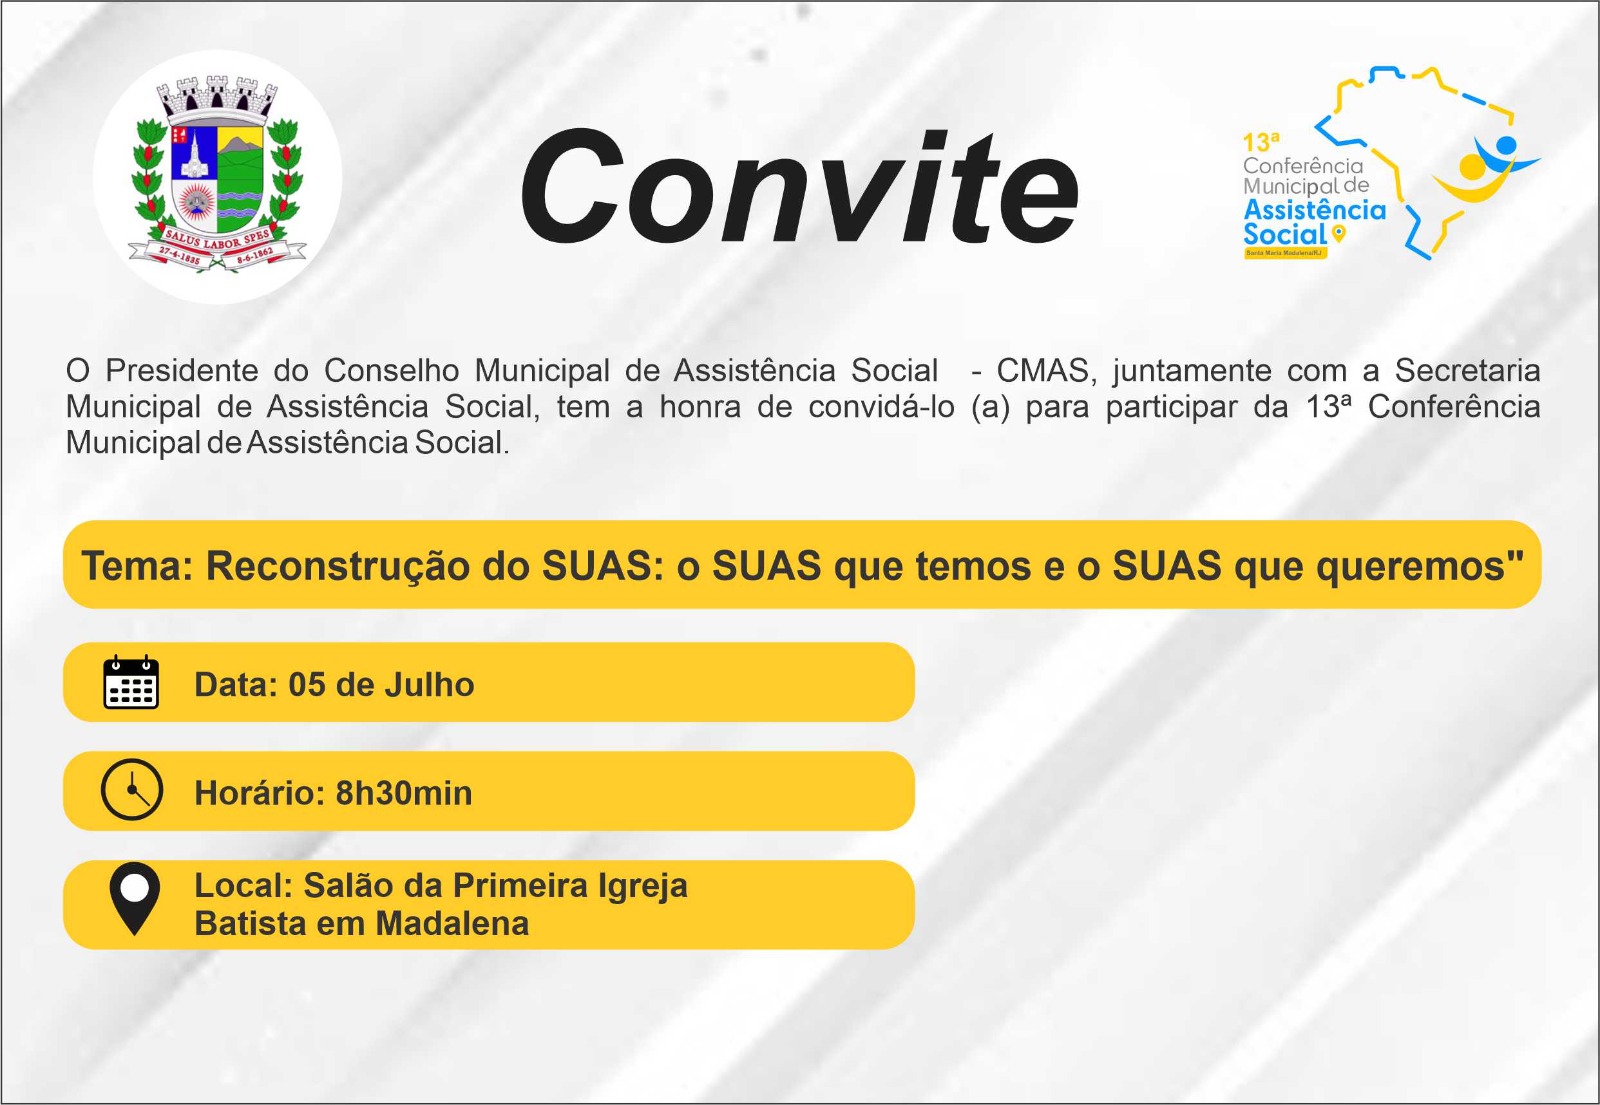 Convite: 13ª Conferência Municipal de Assistência Social de Santa Maria Madalena